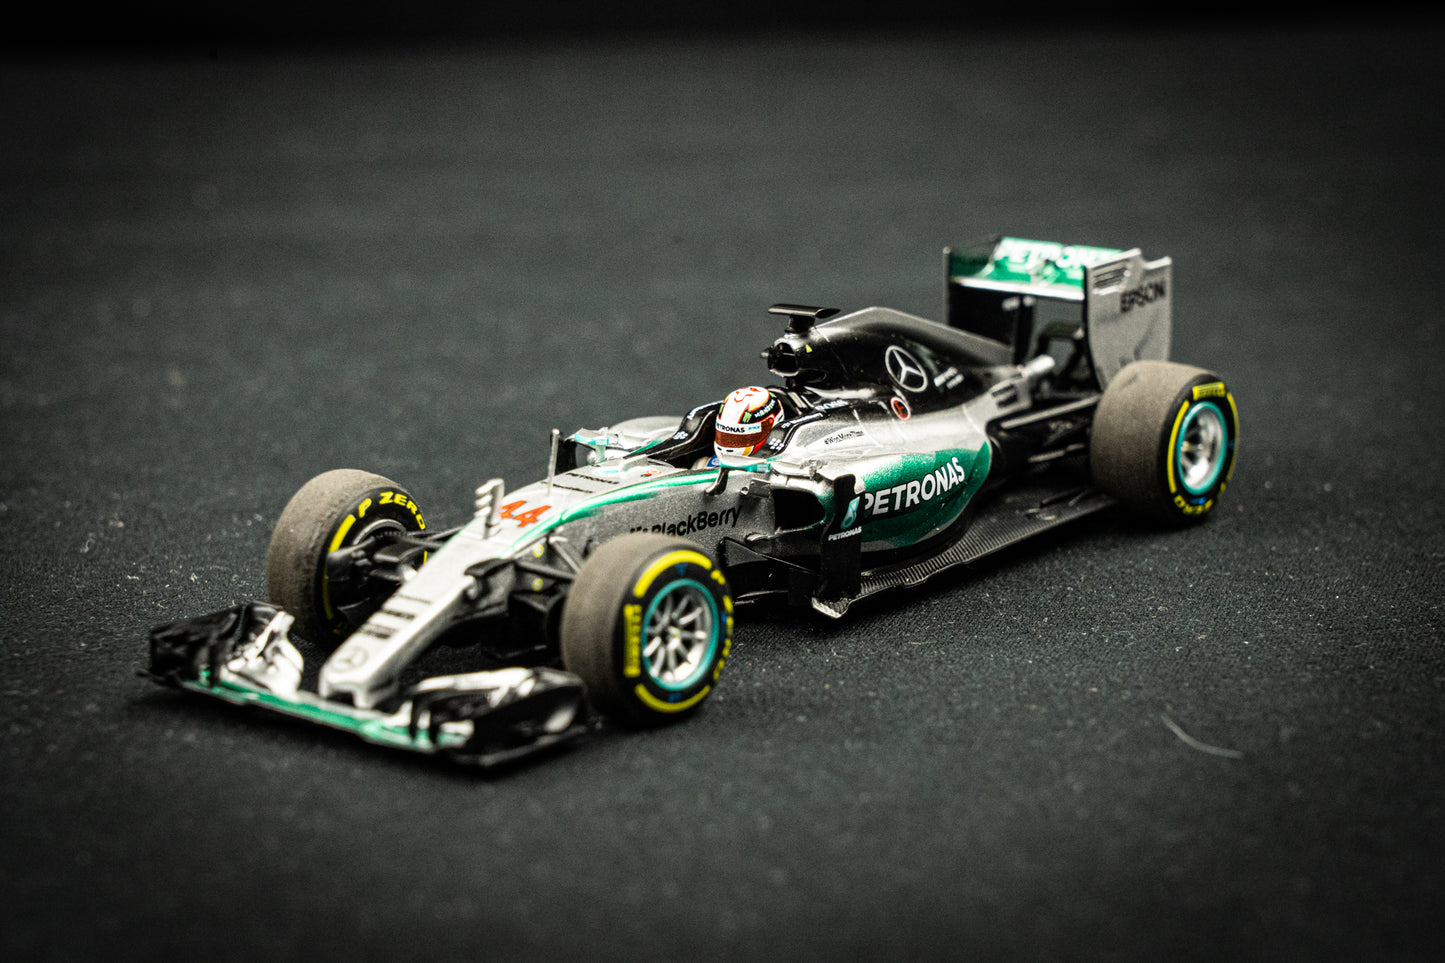 Lewis Hamilton #44 Mercedes W06 Hybrid Formel 1 Weltmeister 2015 - Minichamps 1:43